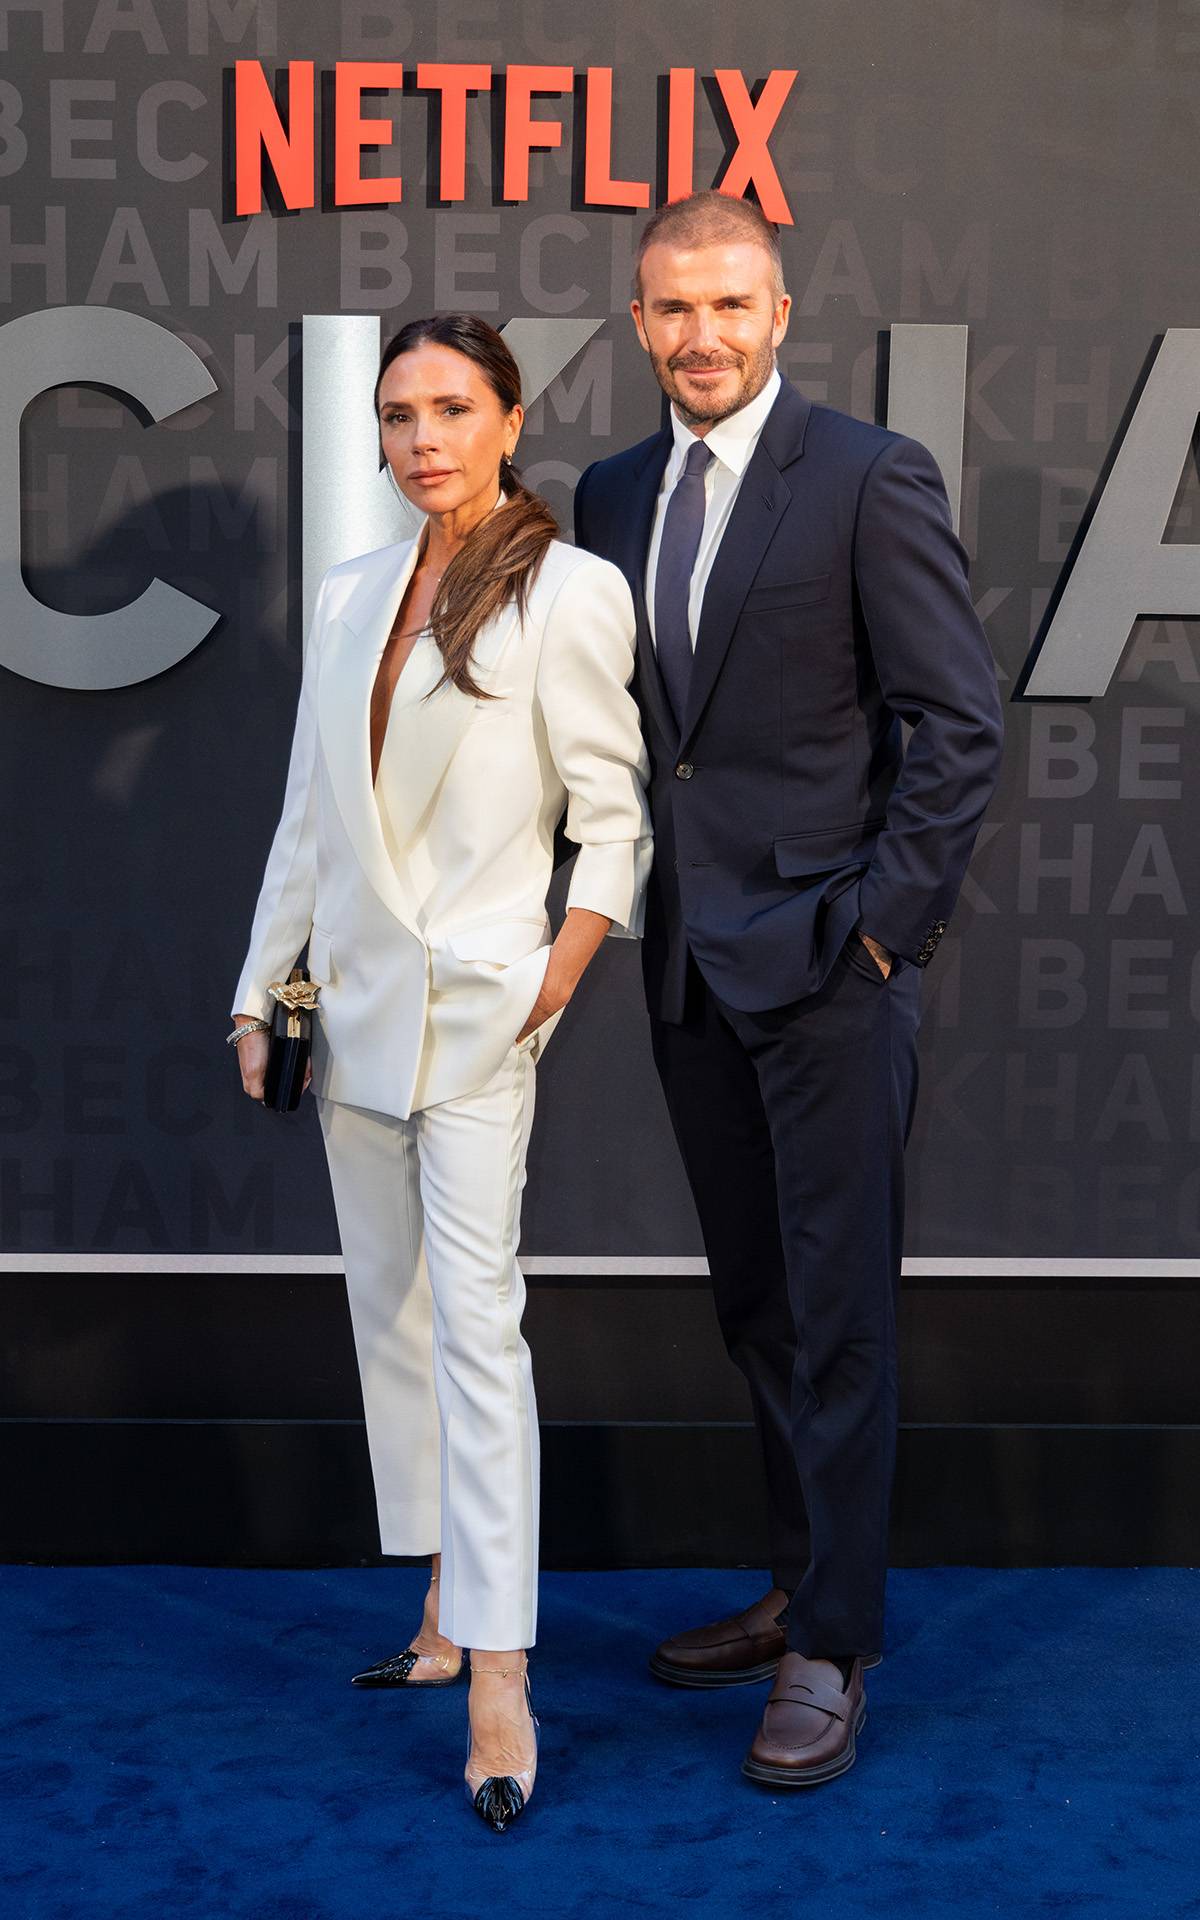 David i Victoria Beckham